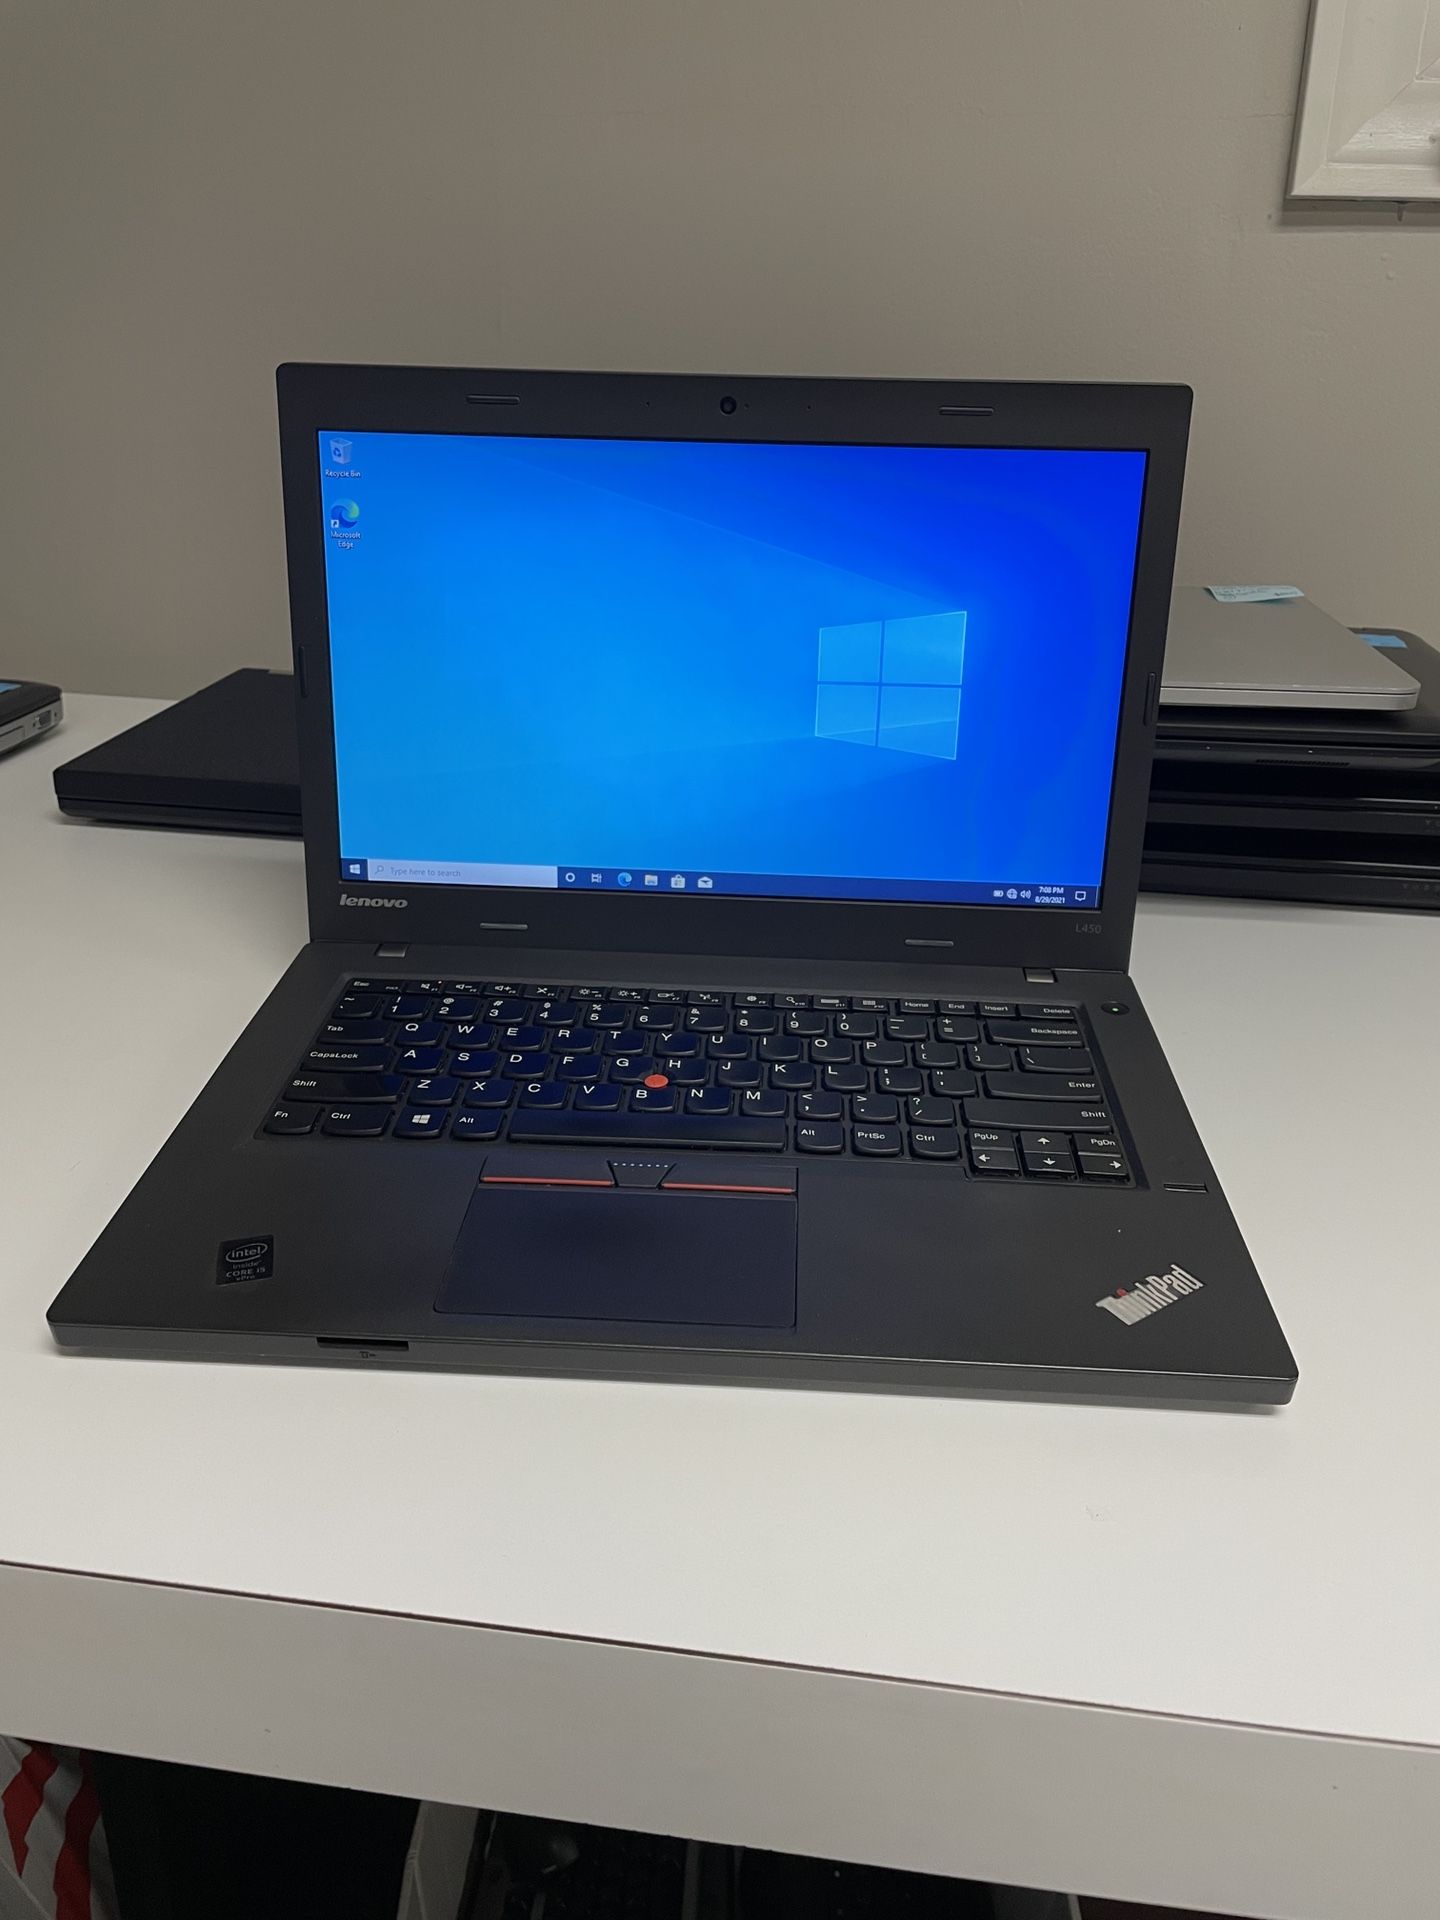 Lenovo ThinkPad L450 13” Laptop 2.50ghz Core i5-4300U 8gb RAM 256gb SSD Windows 10 Pro Webcam WiFi 